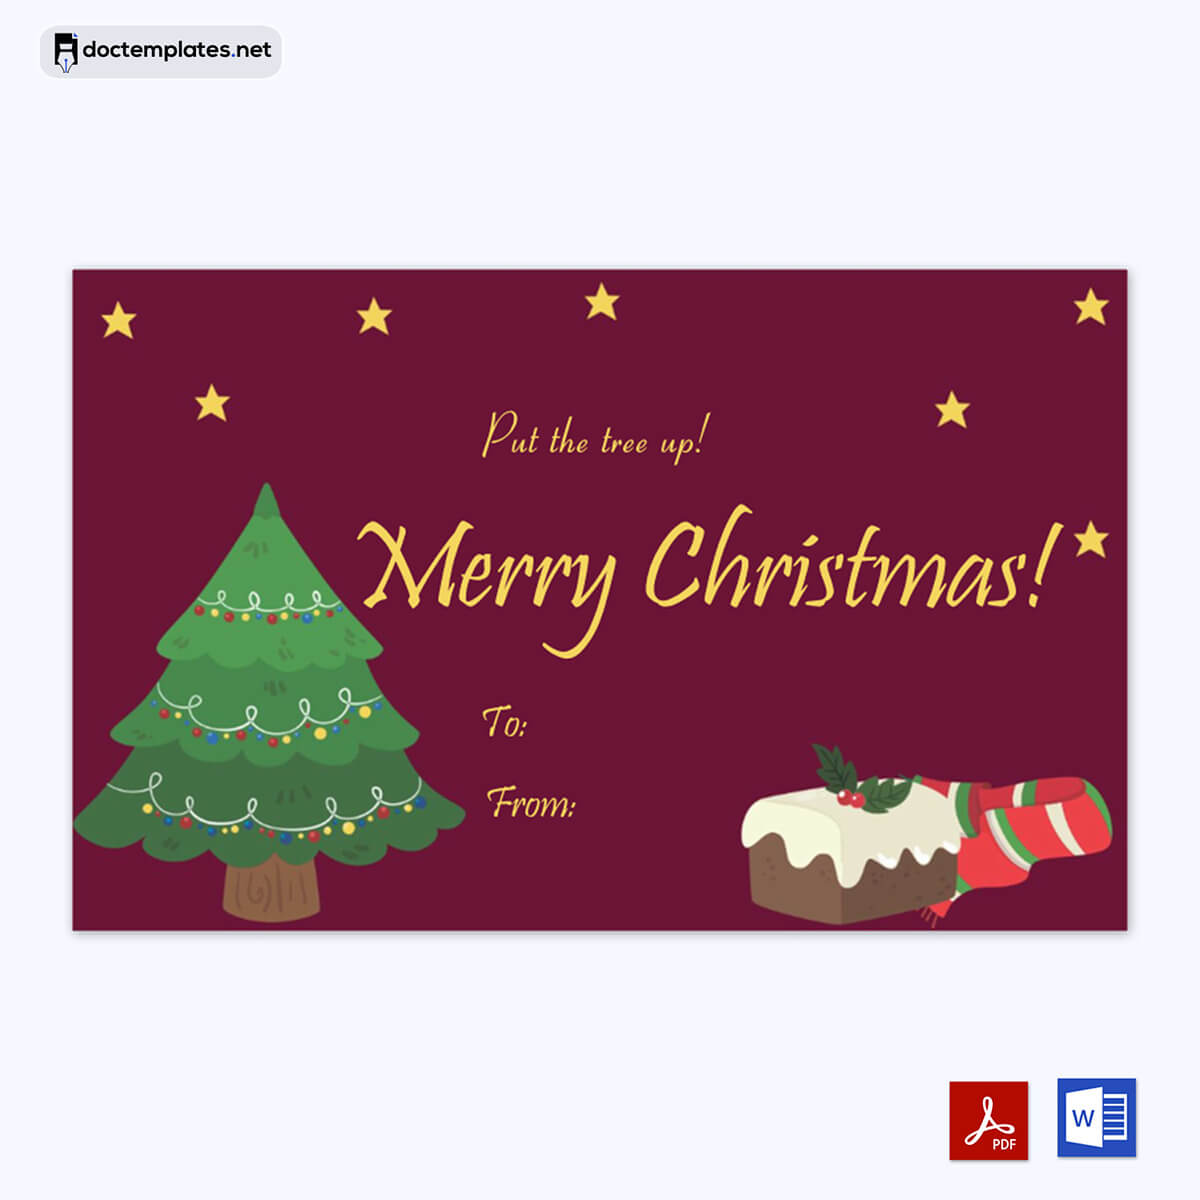 Image of Free printable gift tags PDF
Free printable gift tags PDF
02